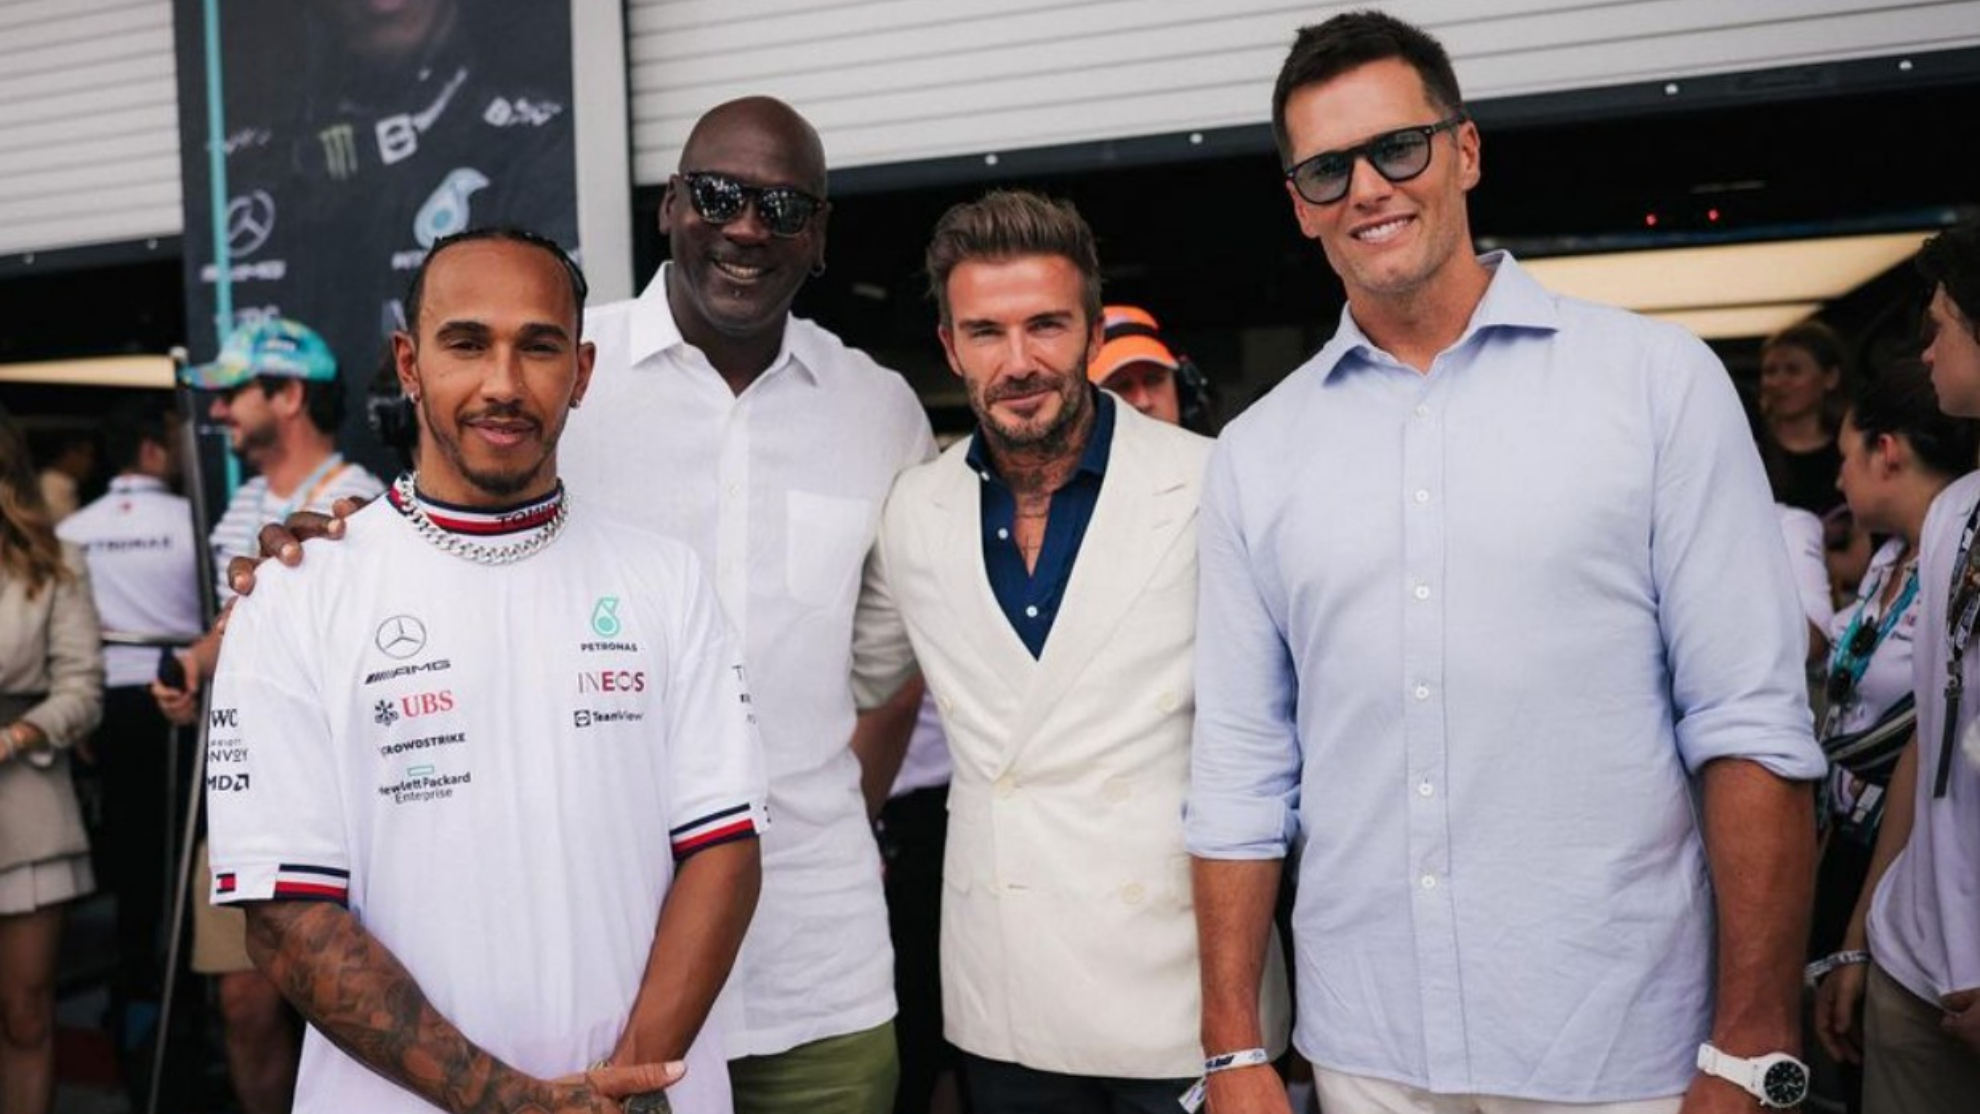 David Beckham: His Netflix documentary series is coming soon